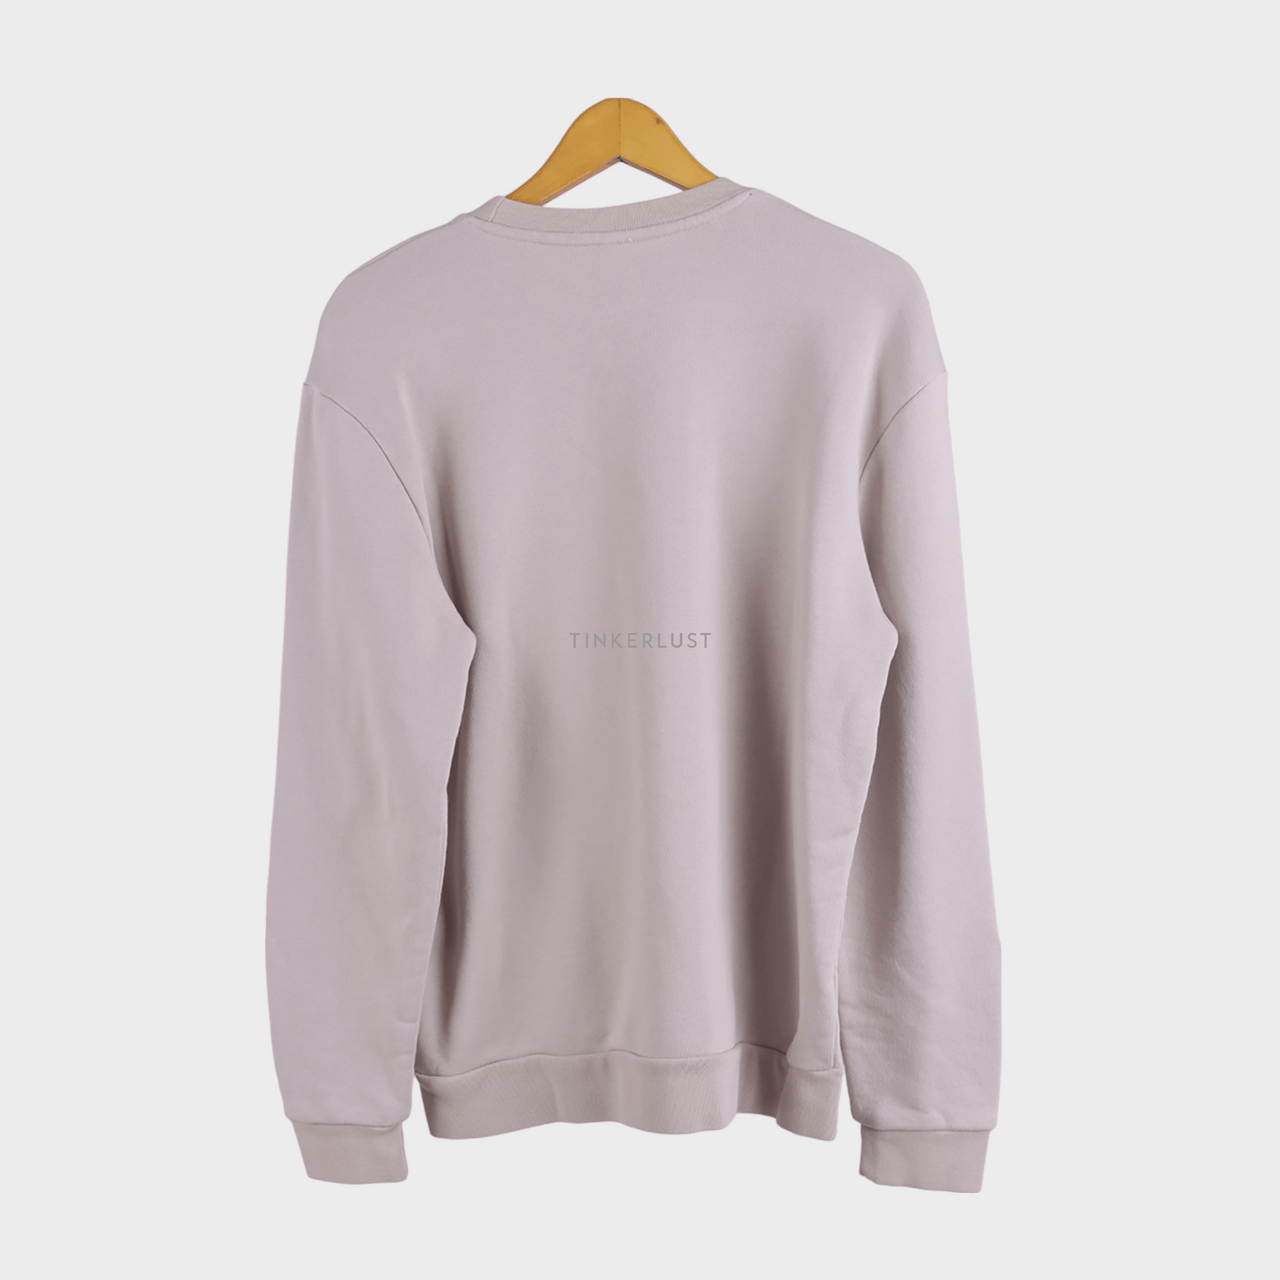 Zara Light Mocca Sweater